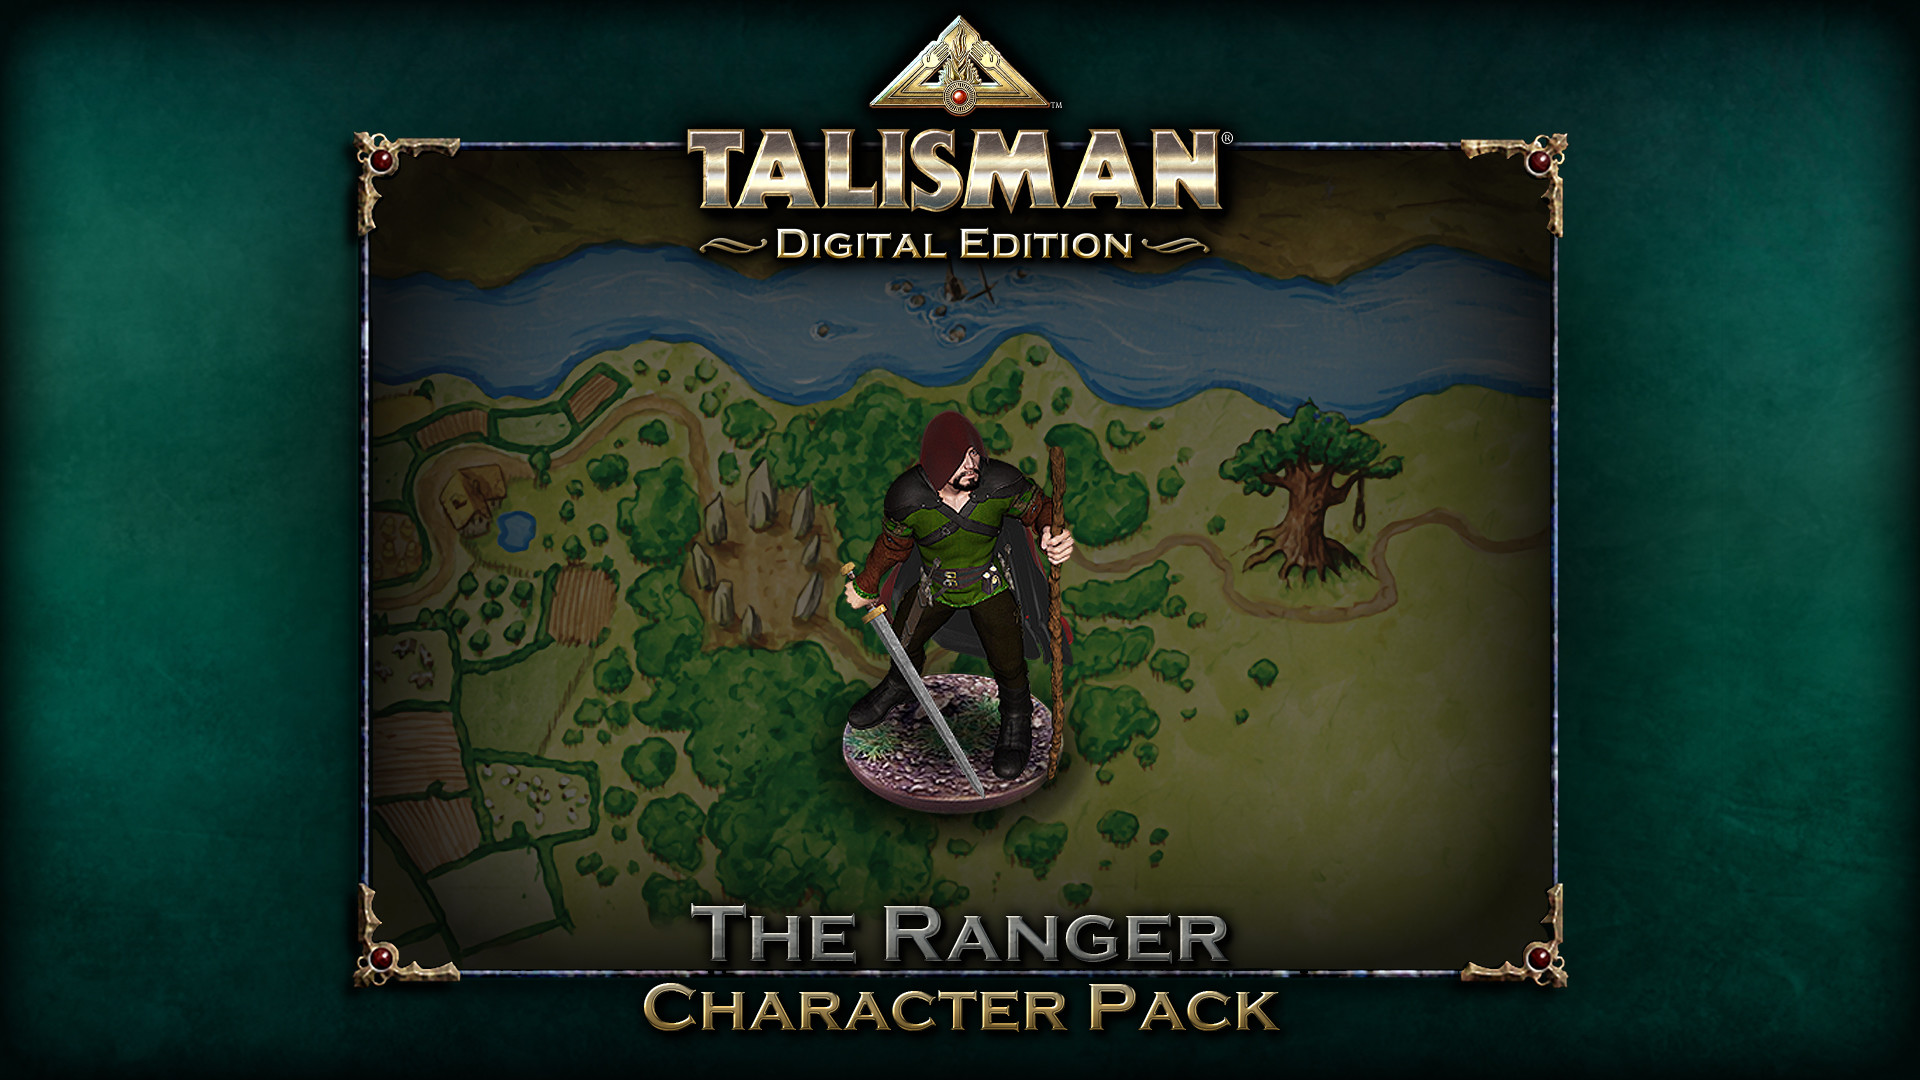 Talisman - Character Pack #20 Ranger DLC Steam CD Key 0.86 USD